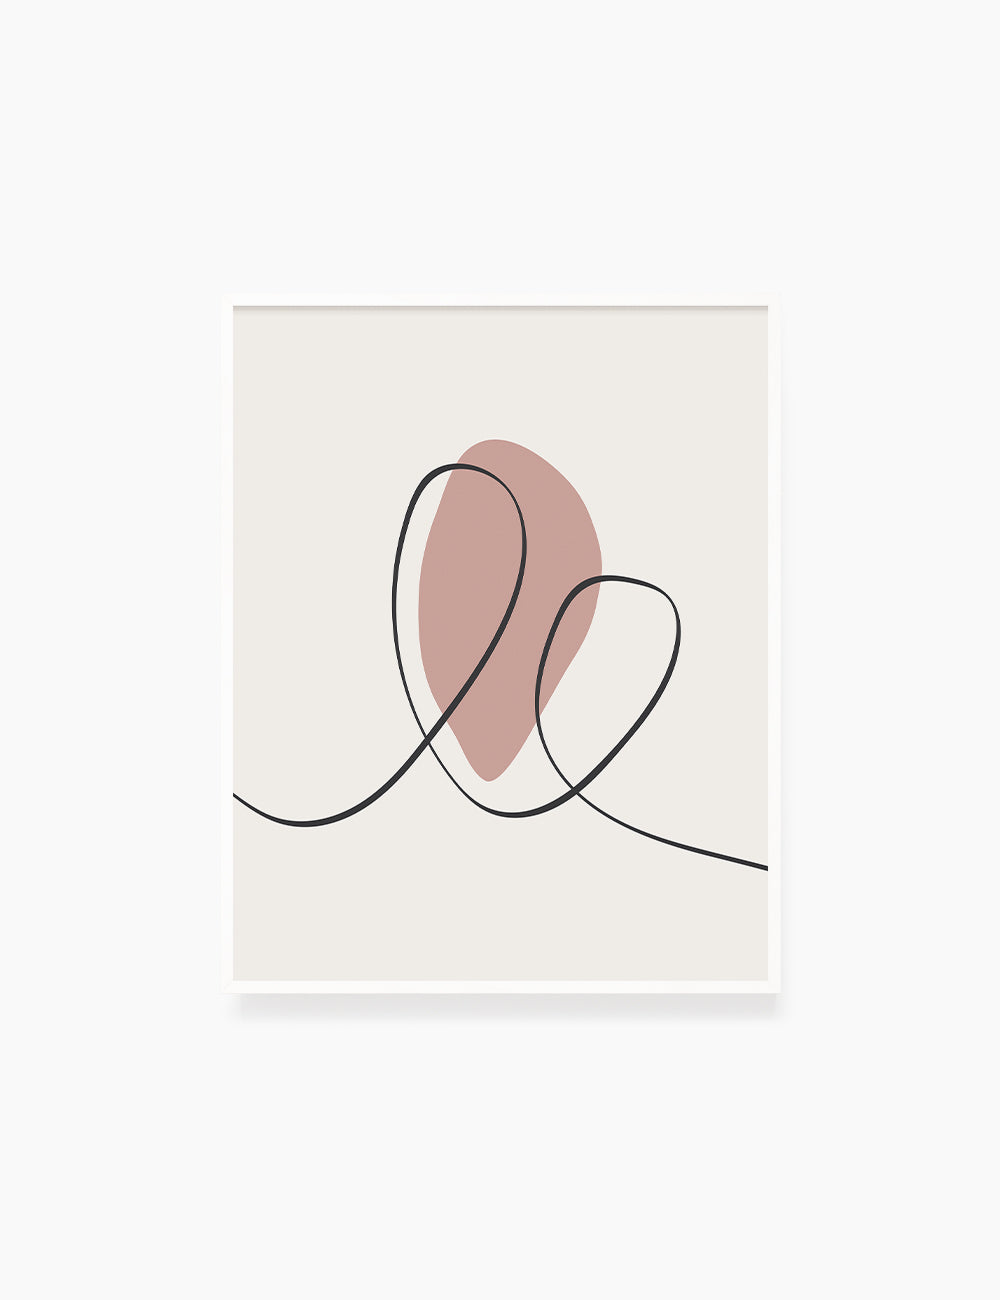 MINIMAL LINE ART. Abstract Heart Shape. Boho Aesthetic. Blush. Rose. Pale Red. Beige. Black. Printable Wall Art Illustration. - PAPER MOON Art & Design